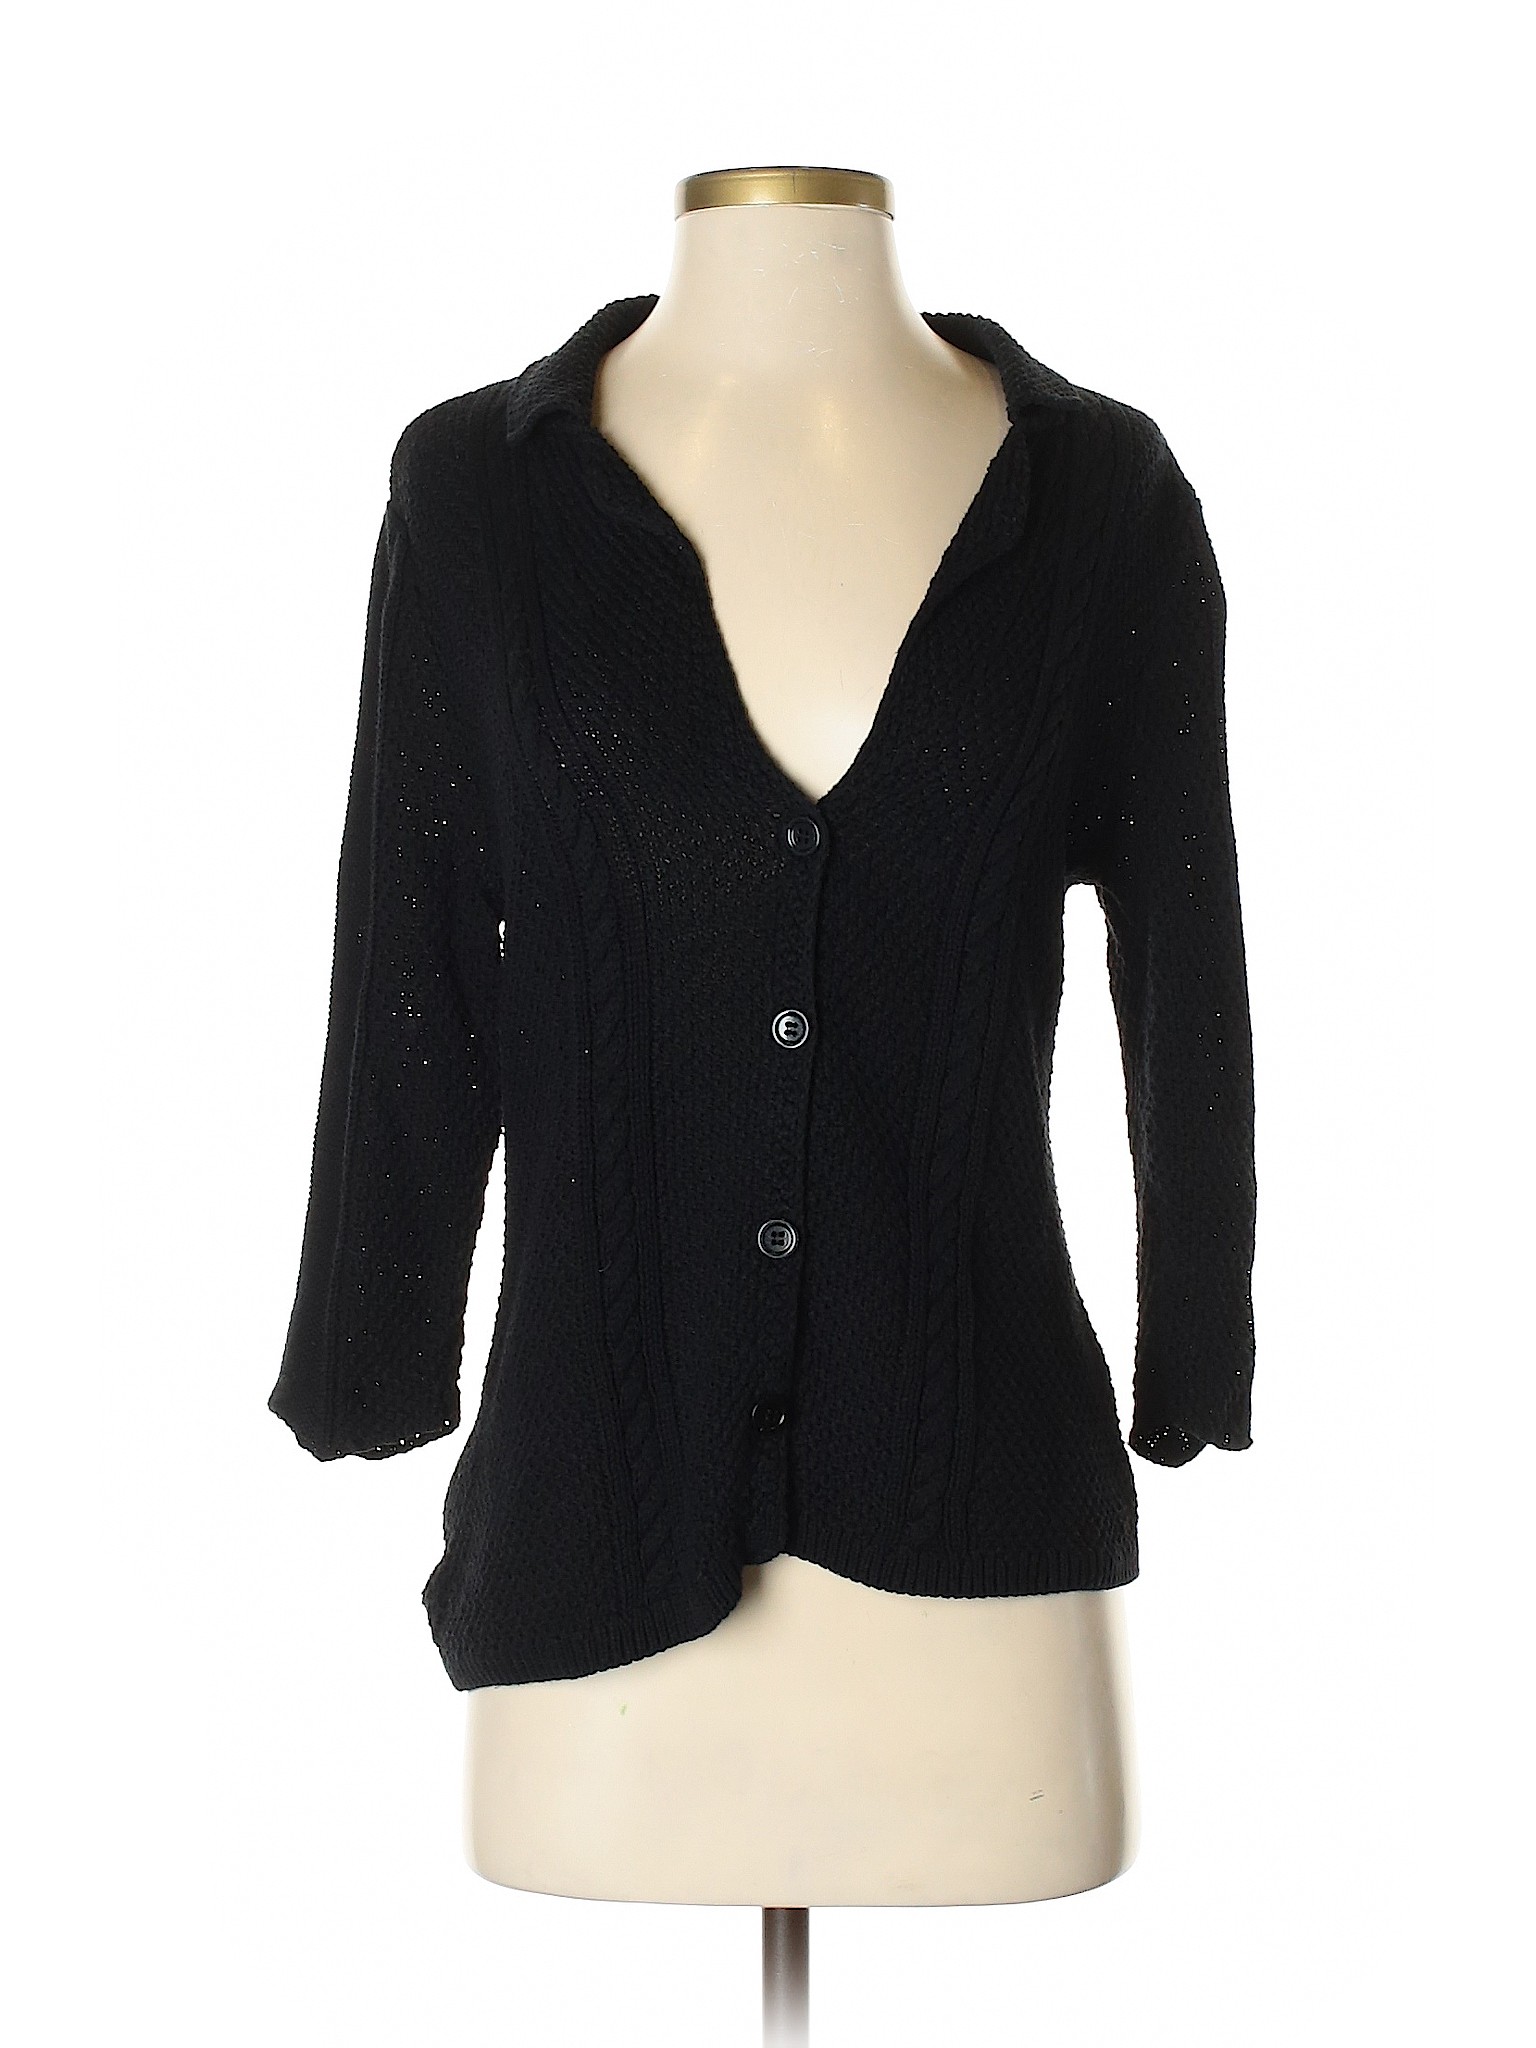 Heather B 100% Cotton Color Block Black Cardigan Size S - 86% off | thredUP